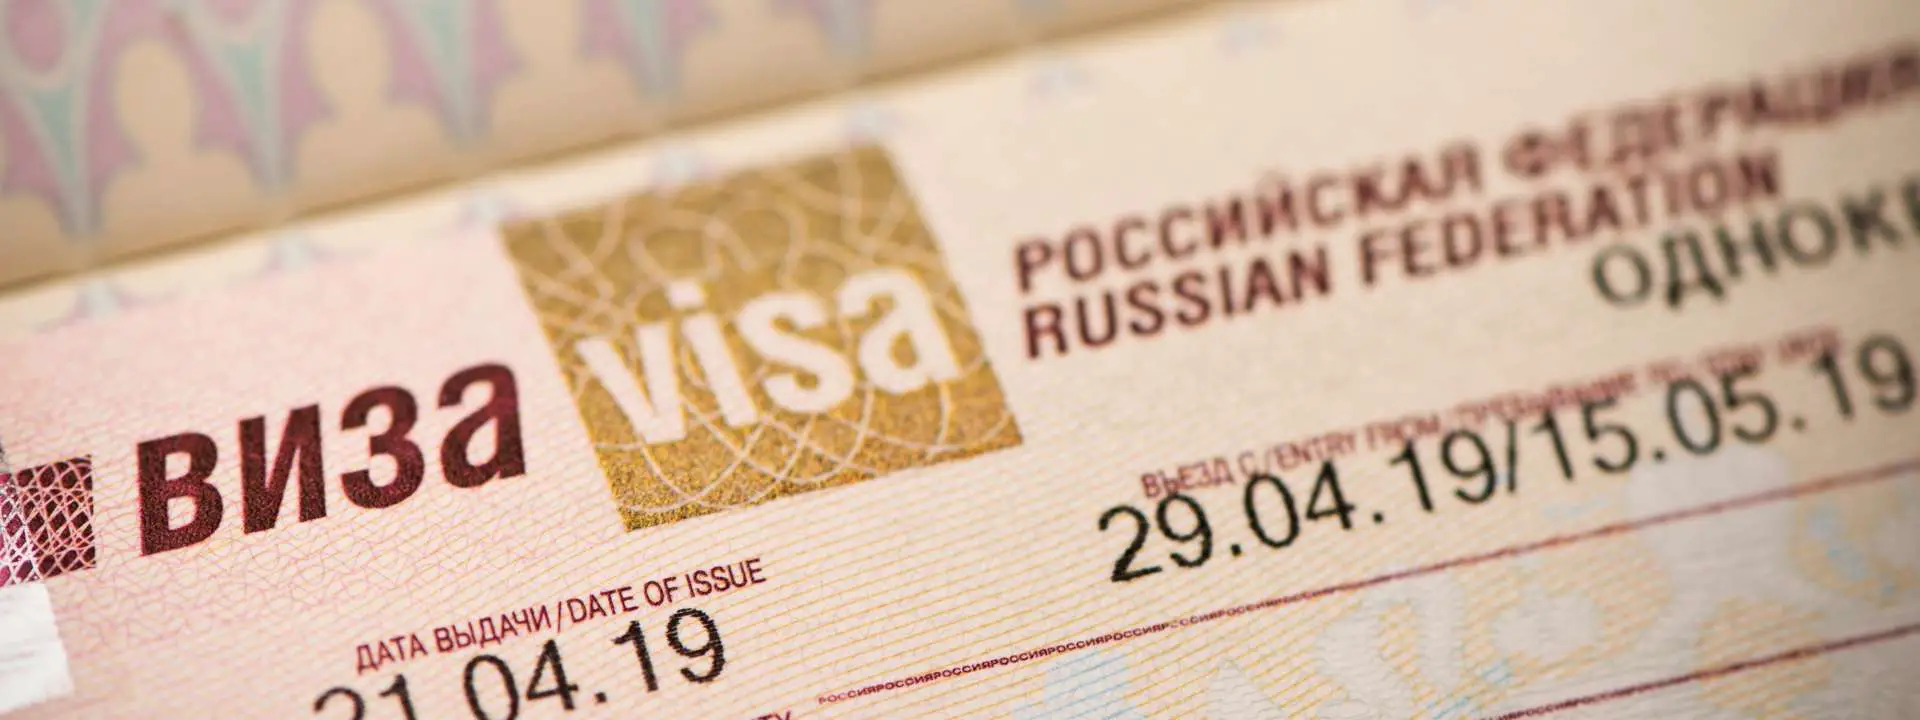 russia tourist visa from abu dhabi